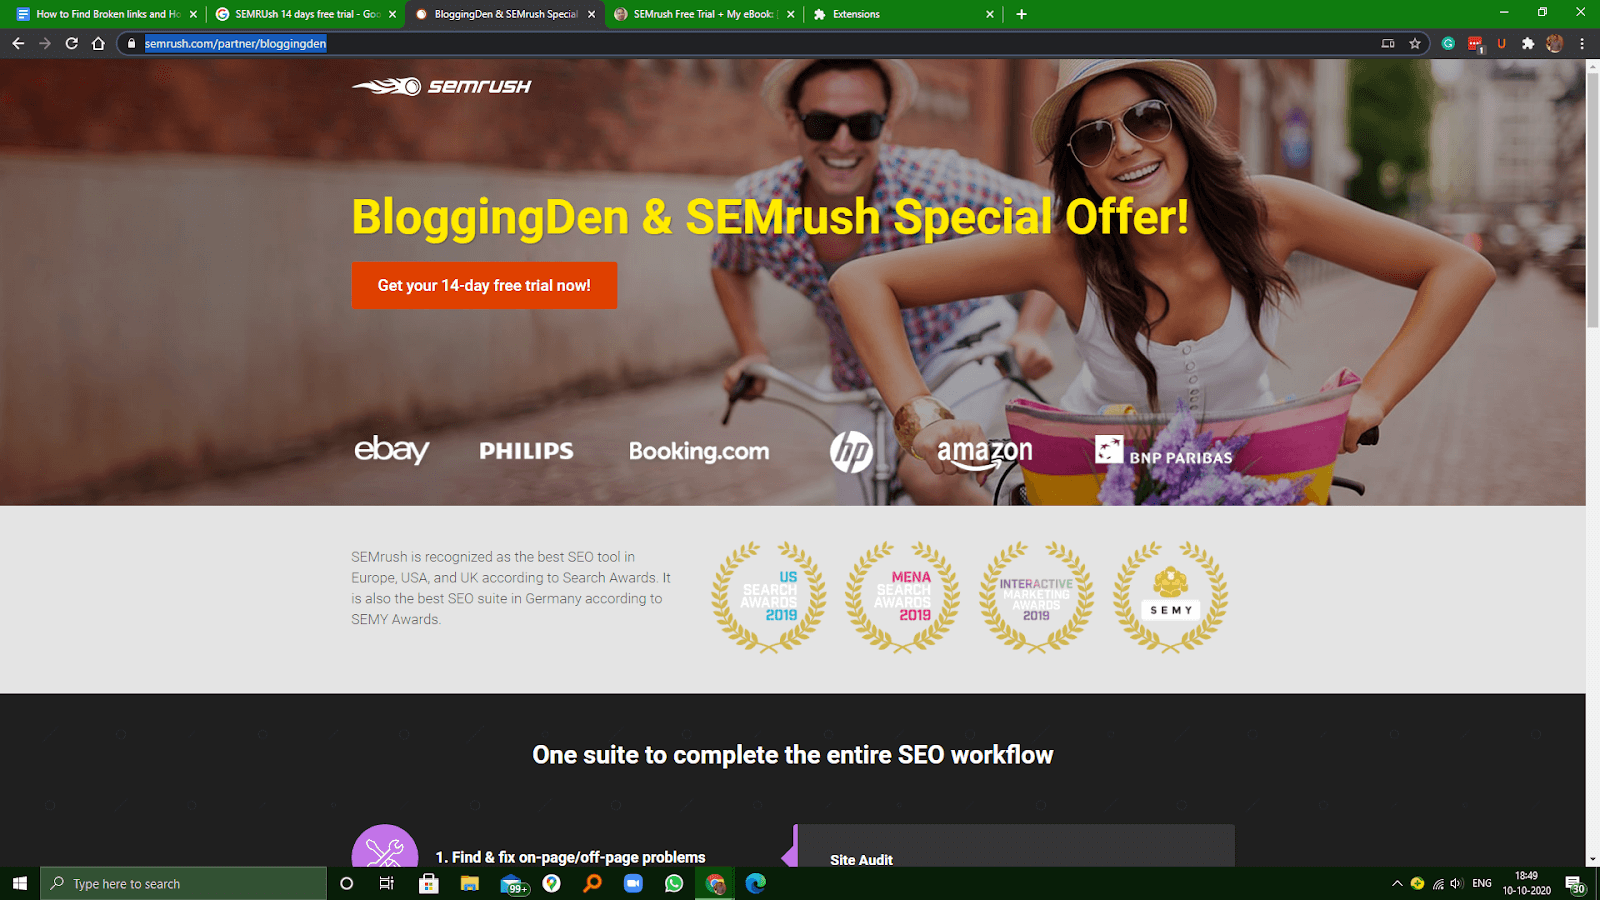 SEMrush free trial from BloggingDen Special Offer